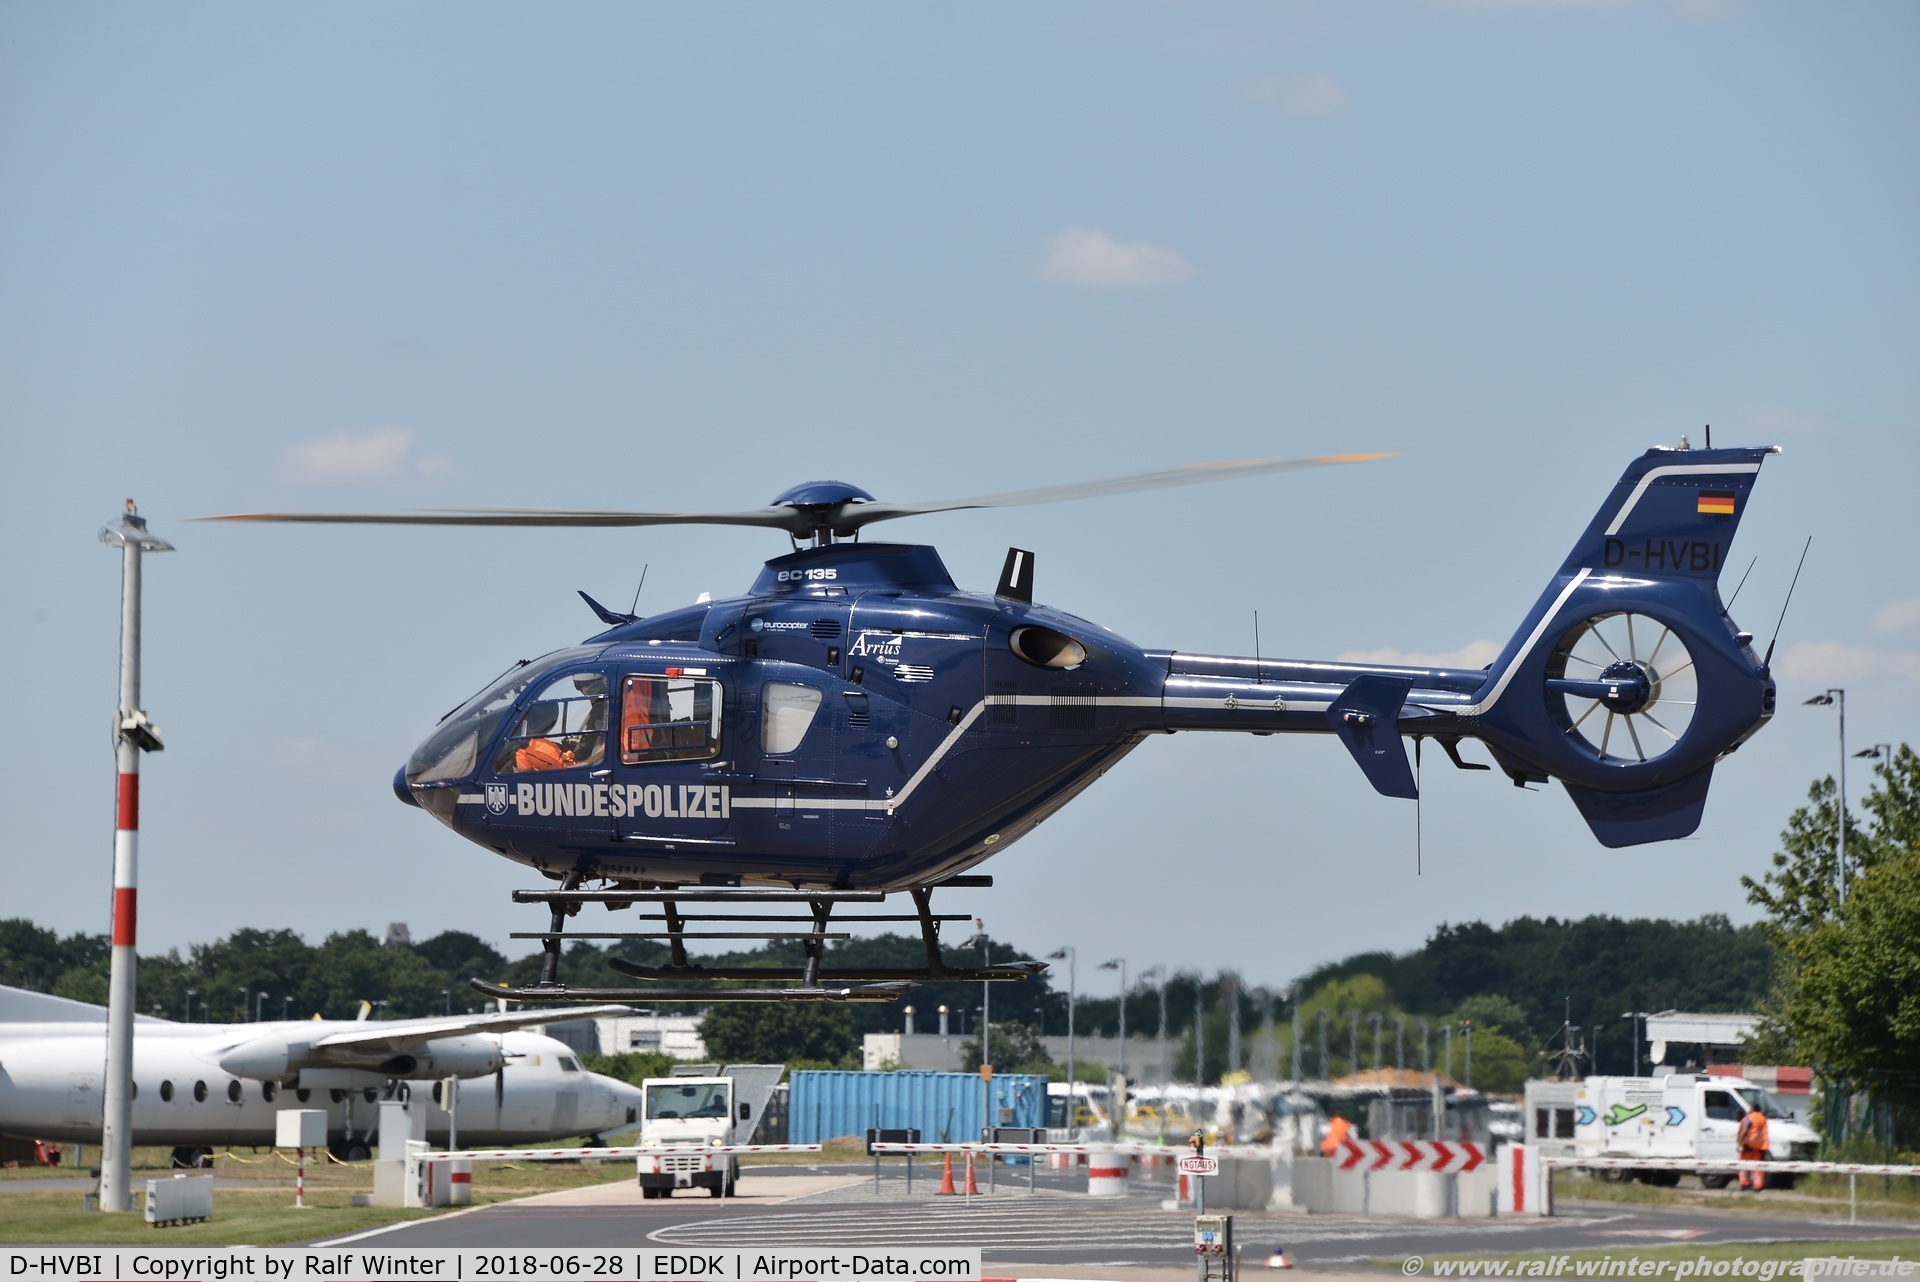 D-HVBI, 2002 Eurocopter EC-135T-2 C/N 0177, Eurocopter EC-135T2i - Bundespolizei - 0177 - D-HVBI - 28.06.2018 - CGN